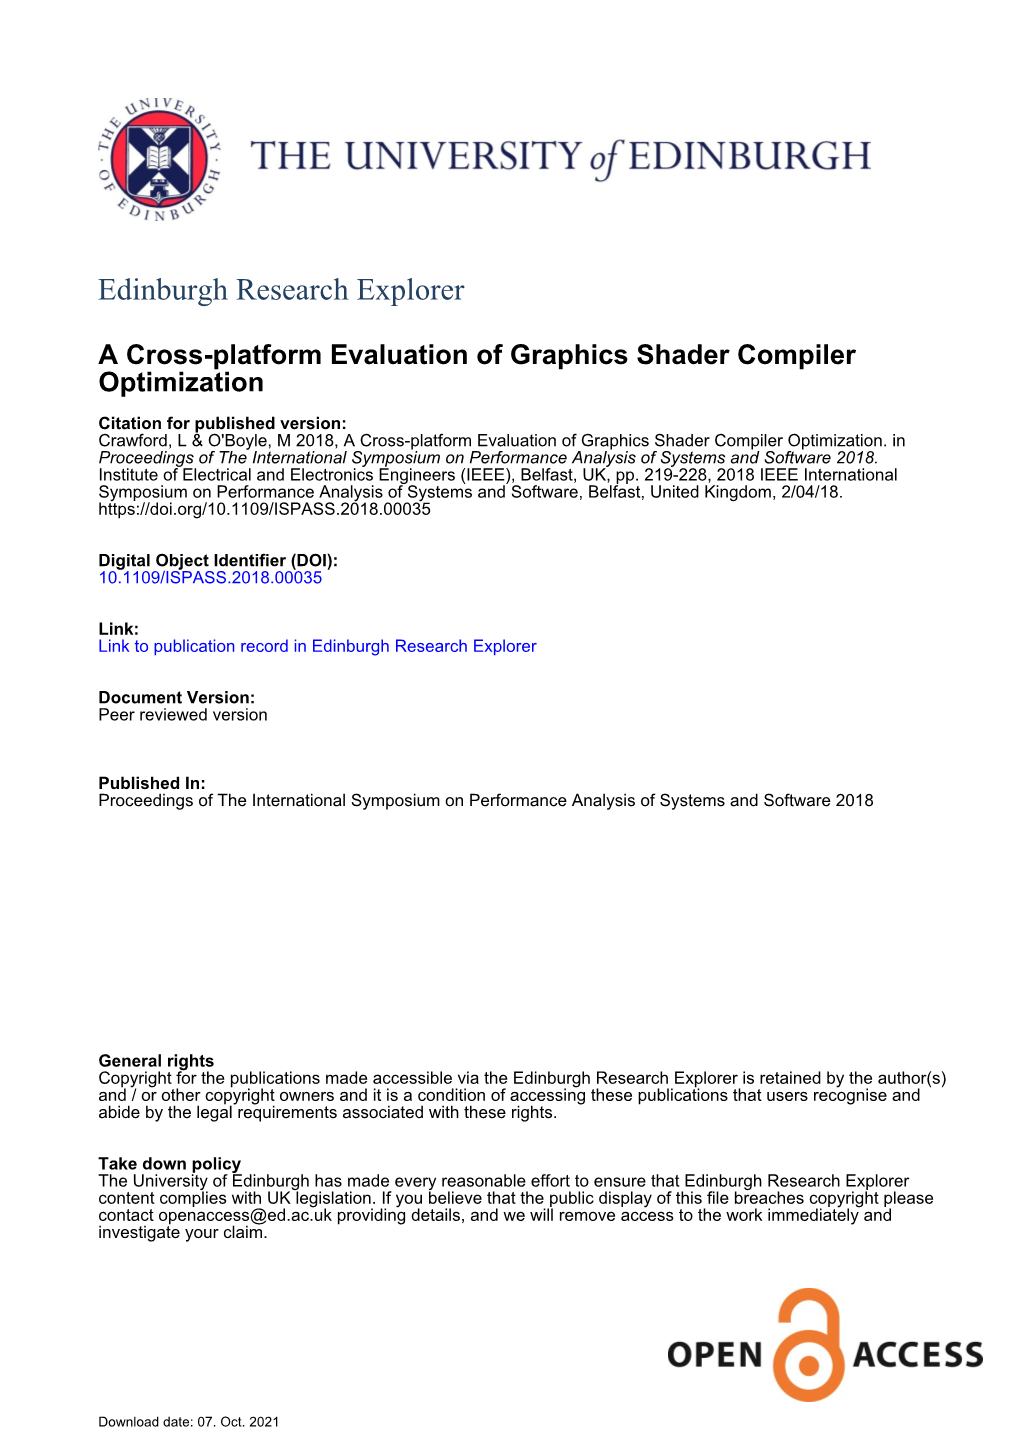 A Cross-Platform Evaluation of Graphics Shader Compiler